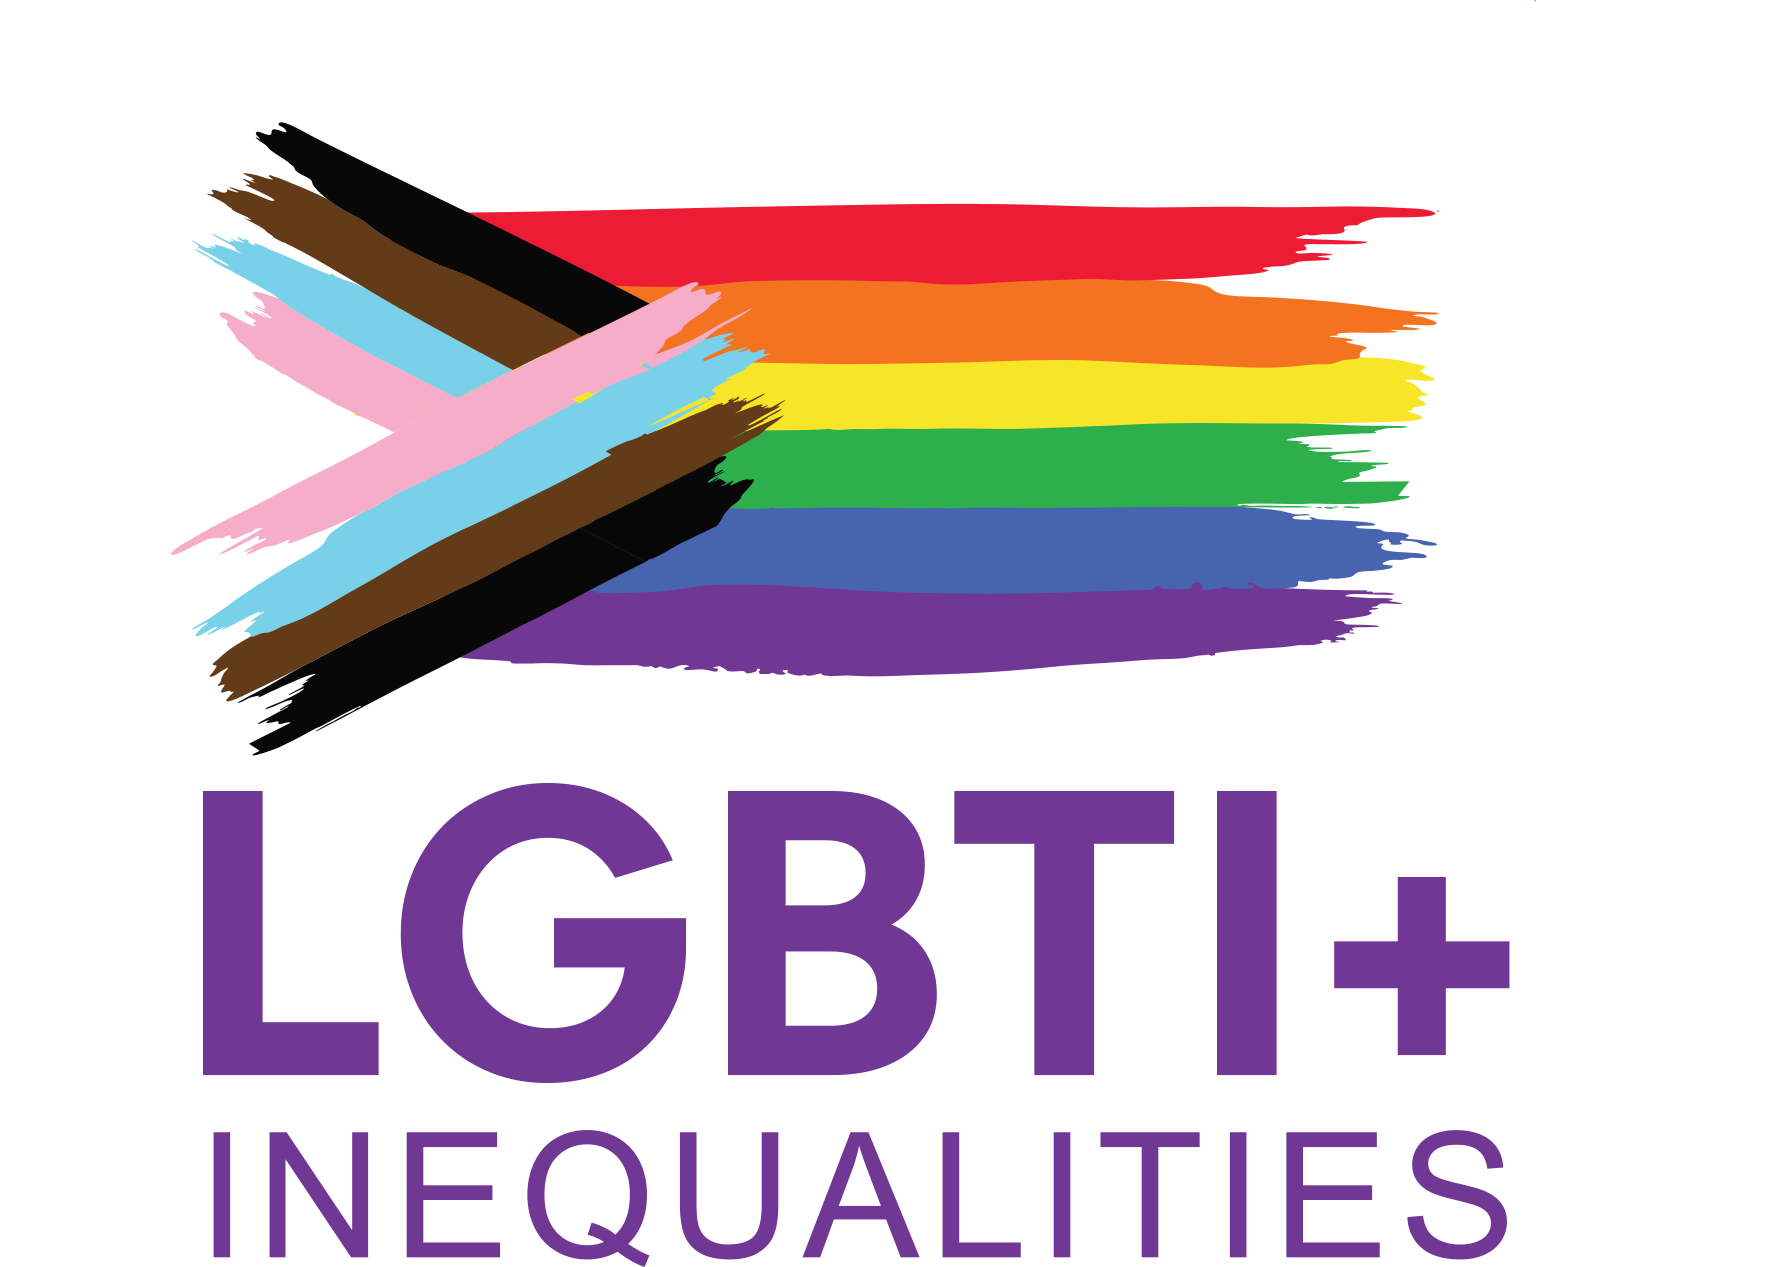 lgbti inequalities logo